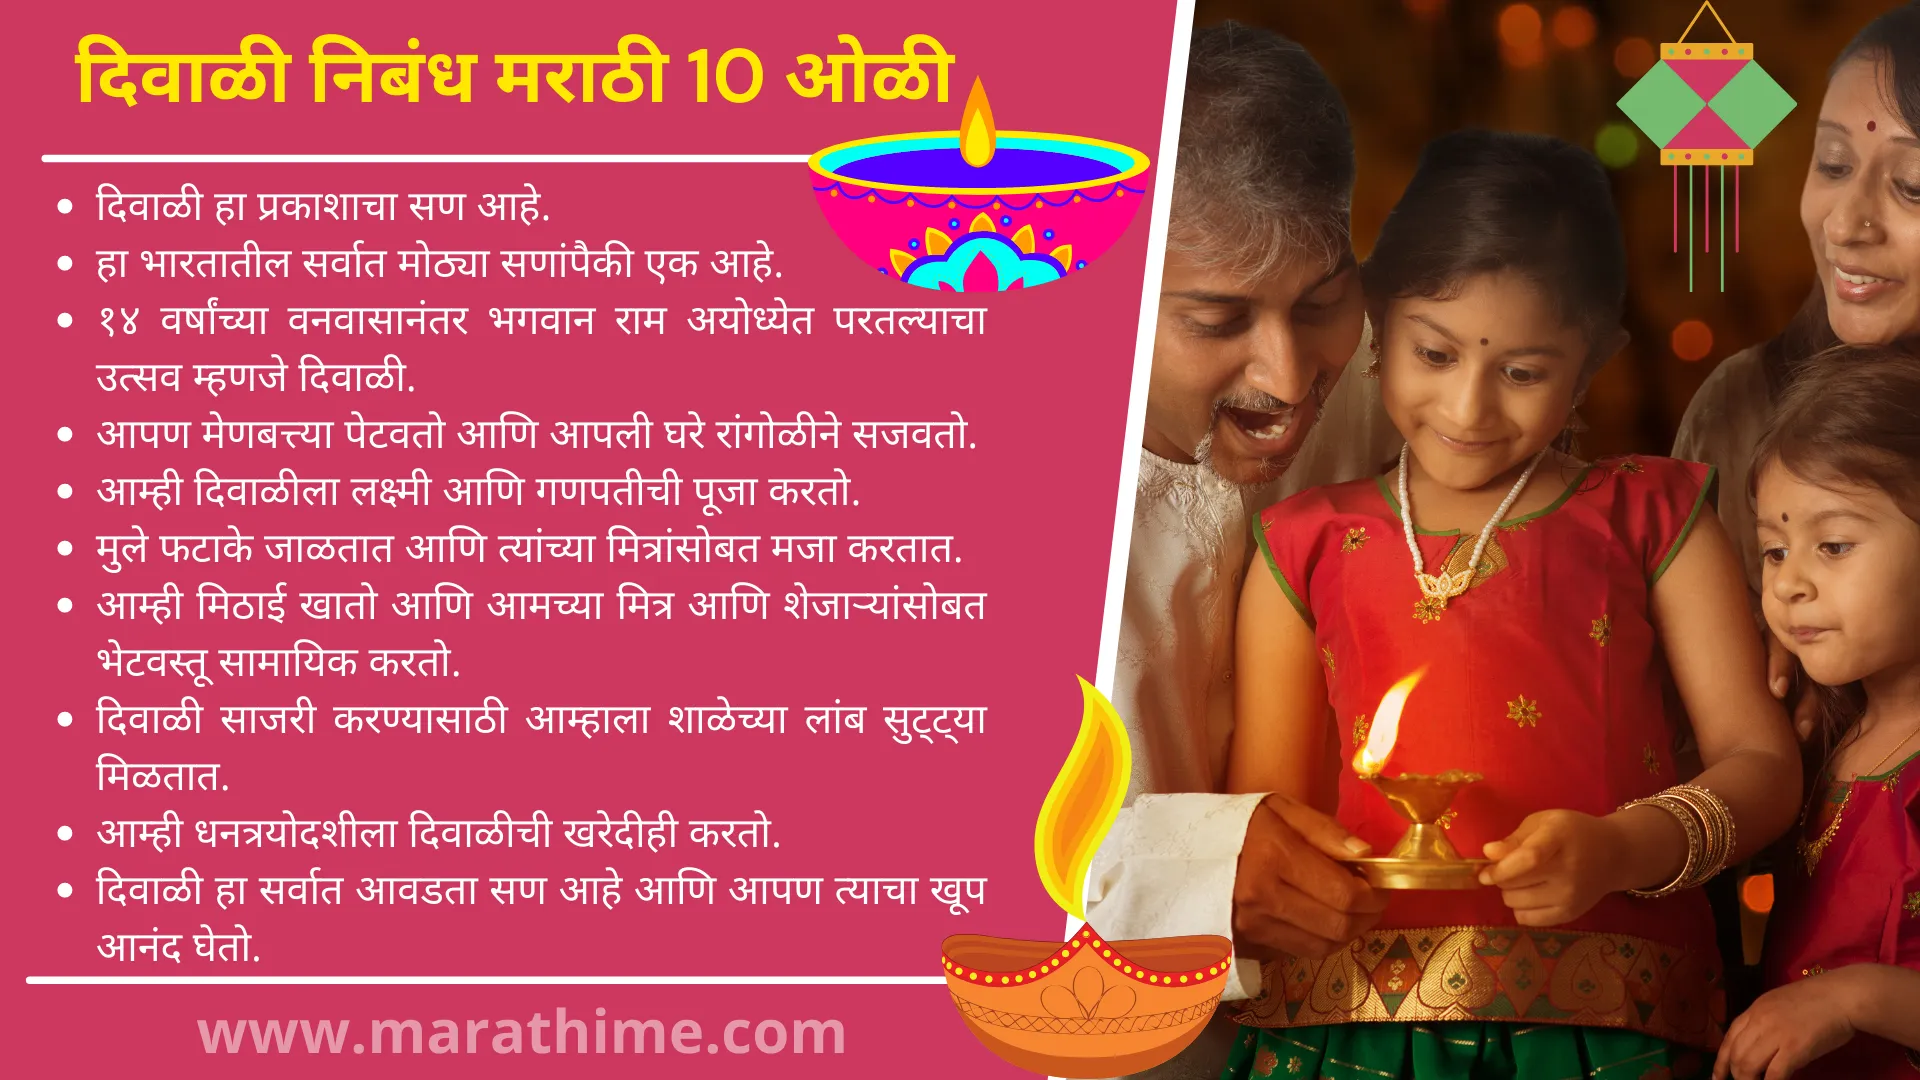 दिवाळी निबंध 10 ओळी-10 Lines on Diwali in Marathi